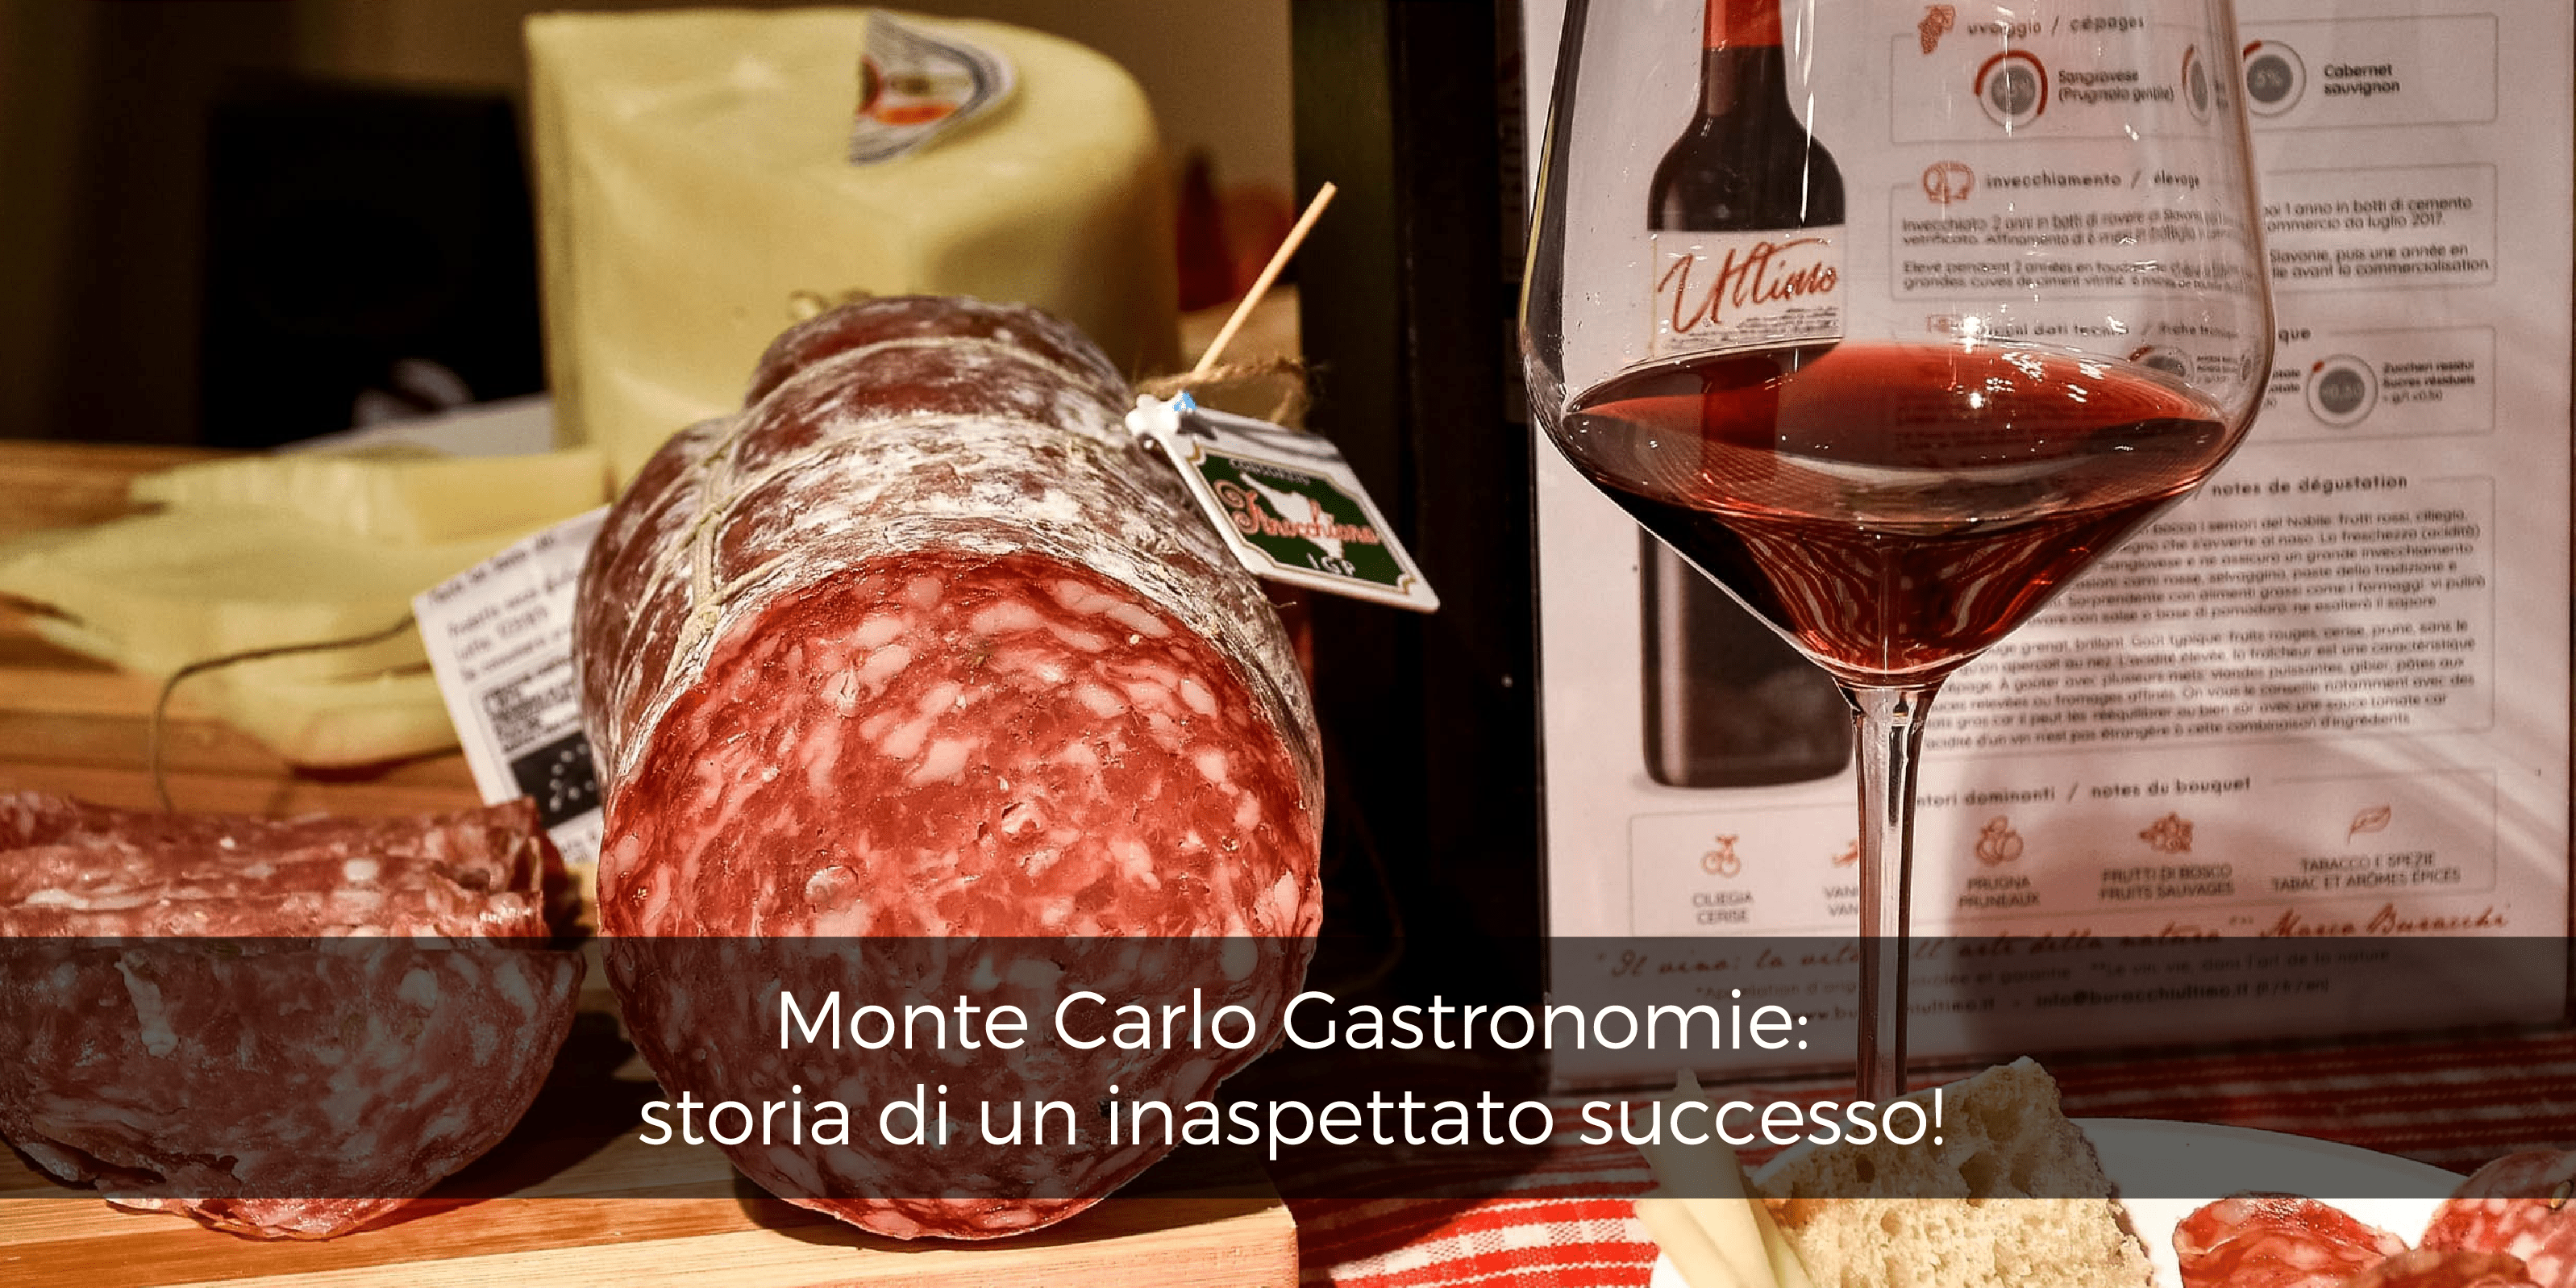 Ultimo A Monte Carlo Gastronomie Un Premio E Una Straordinaria Merenda Toscana Buracchi Ultimo - kia pham choi roblox como tener robux gratis y real